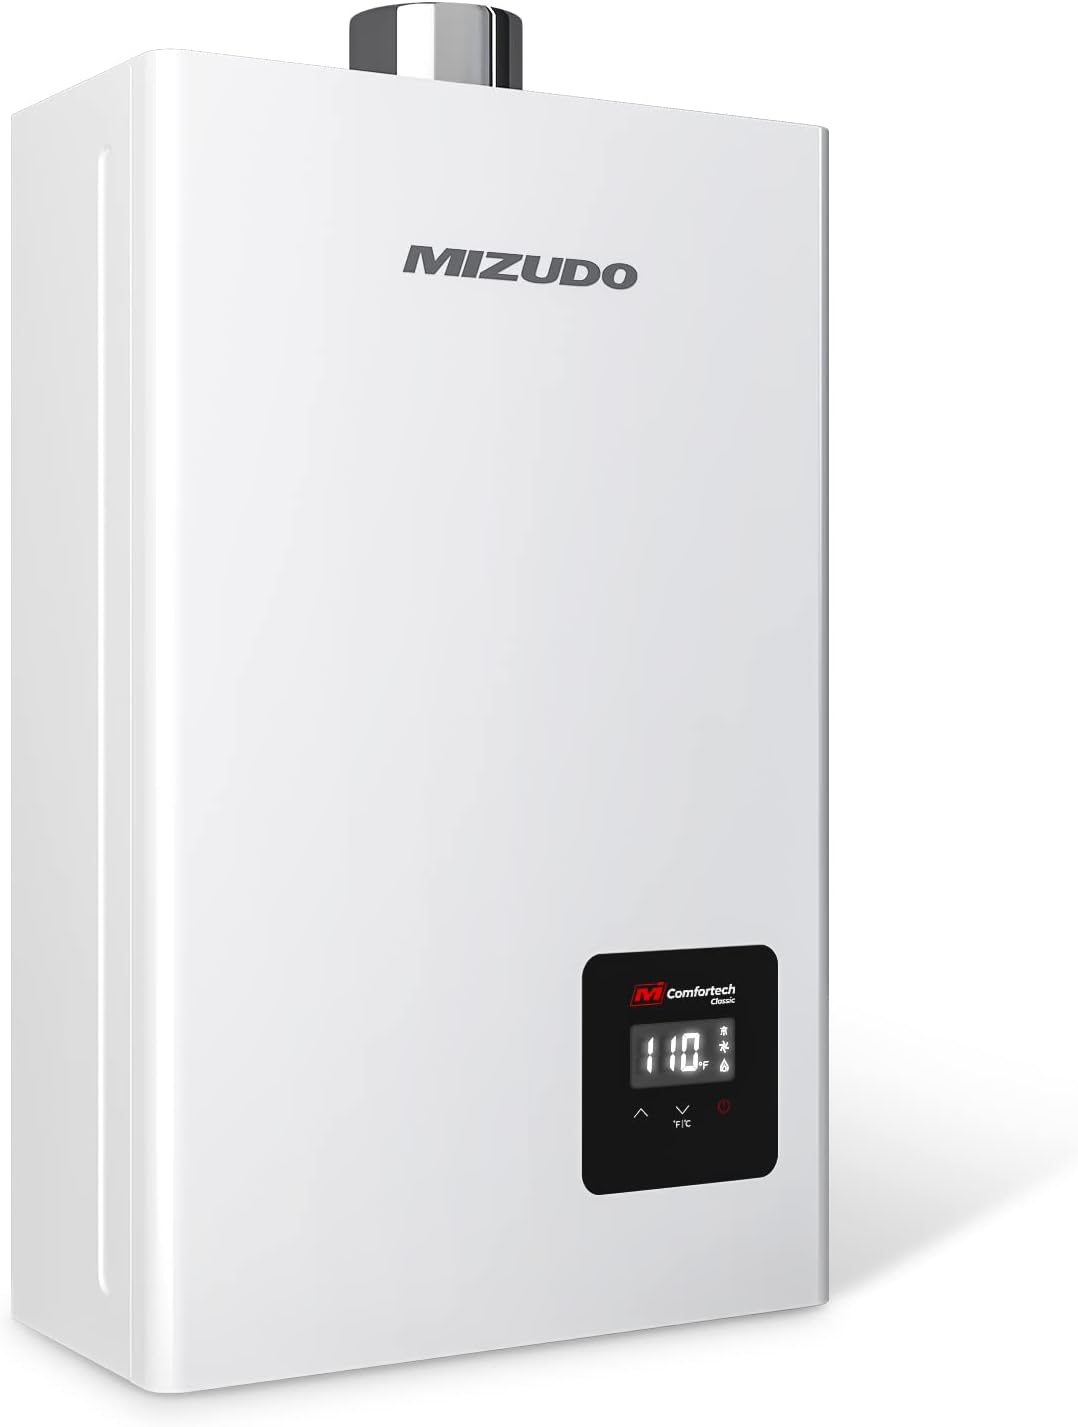 Mizudo Natural Gas Tankless Water Heater 3.6 GPM, [...]